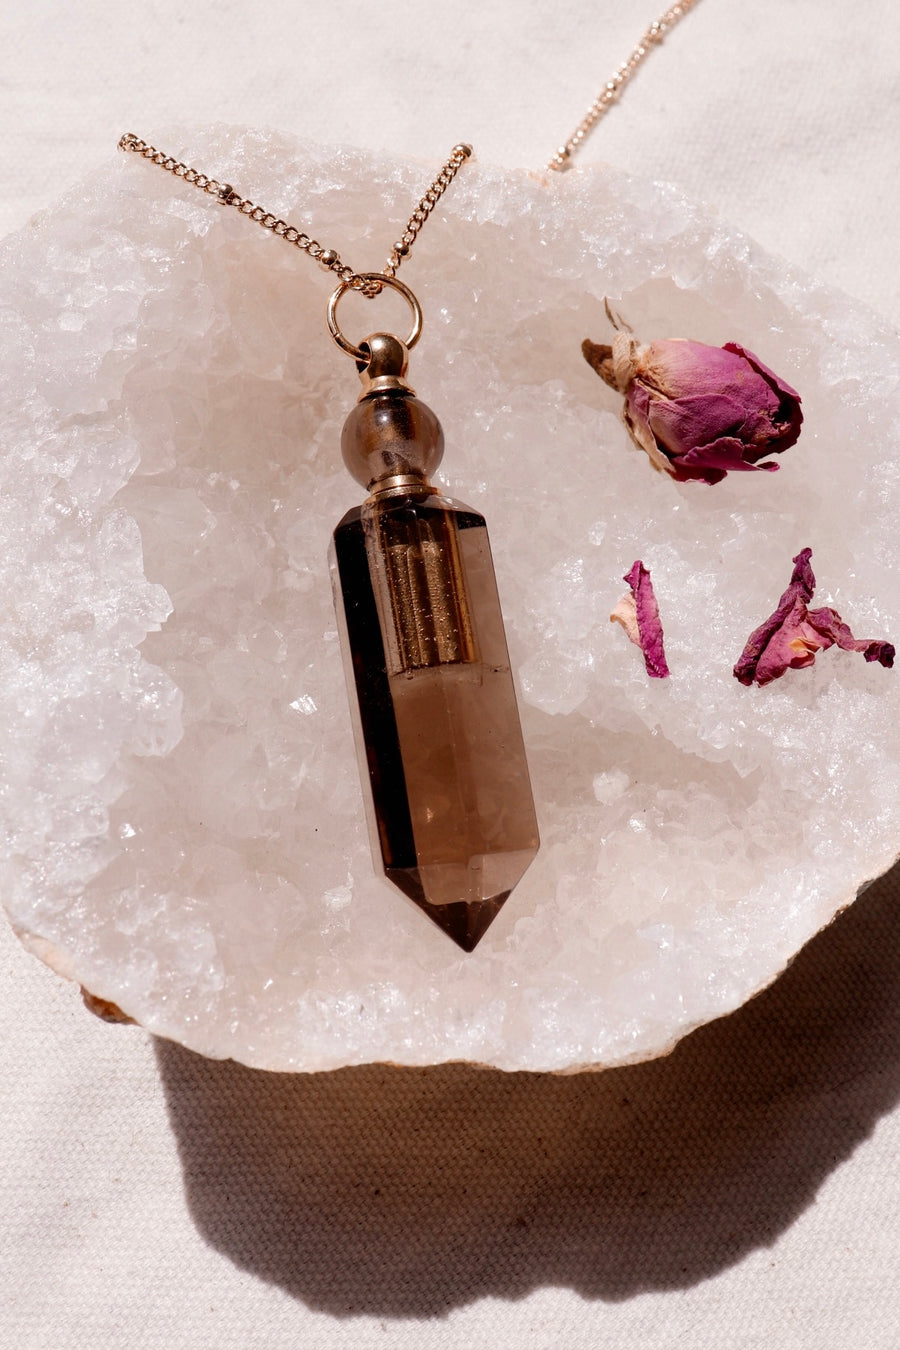 Potion bottle necklace | Smoky quartz